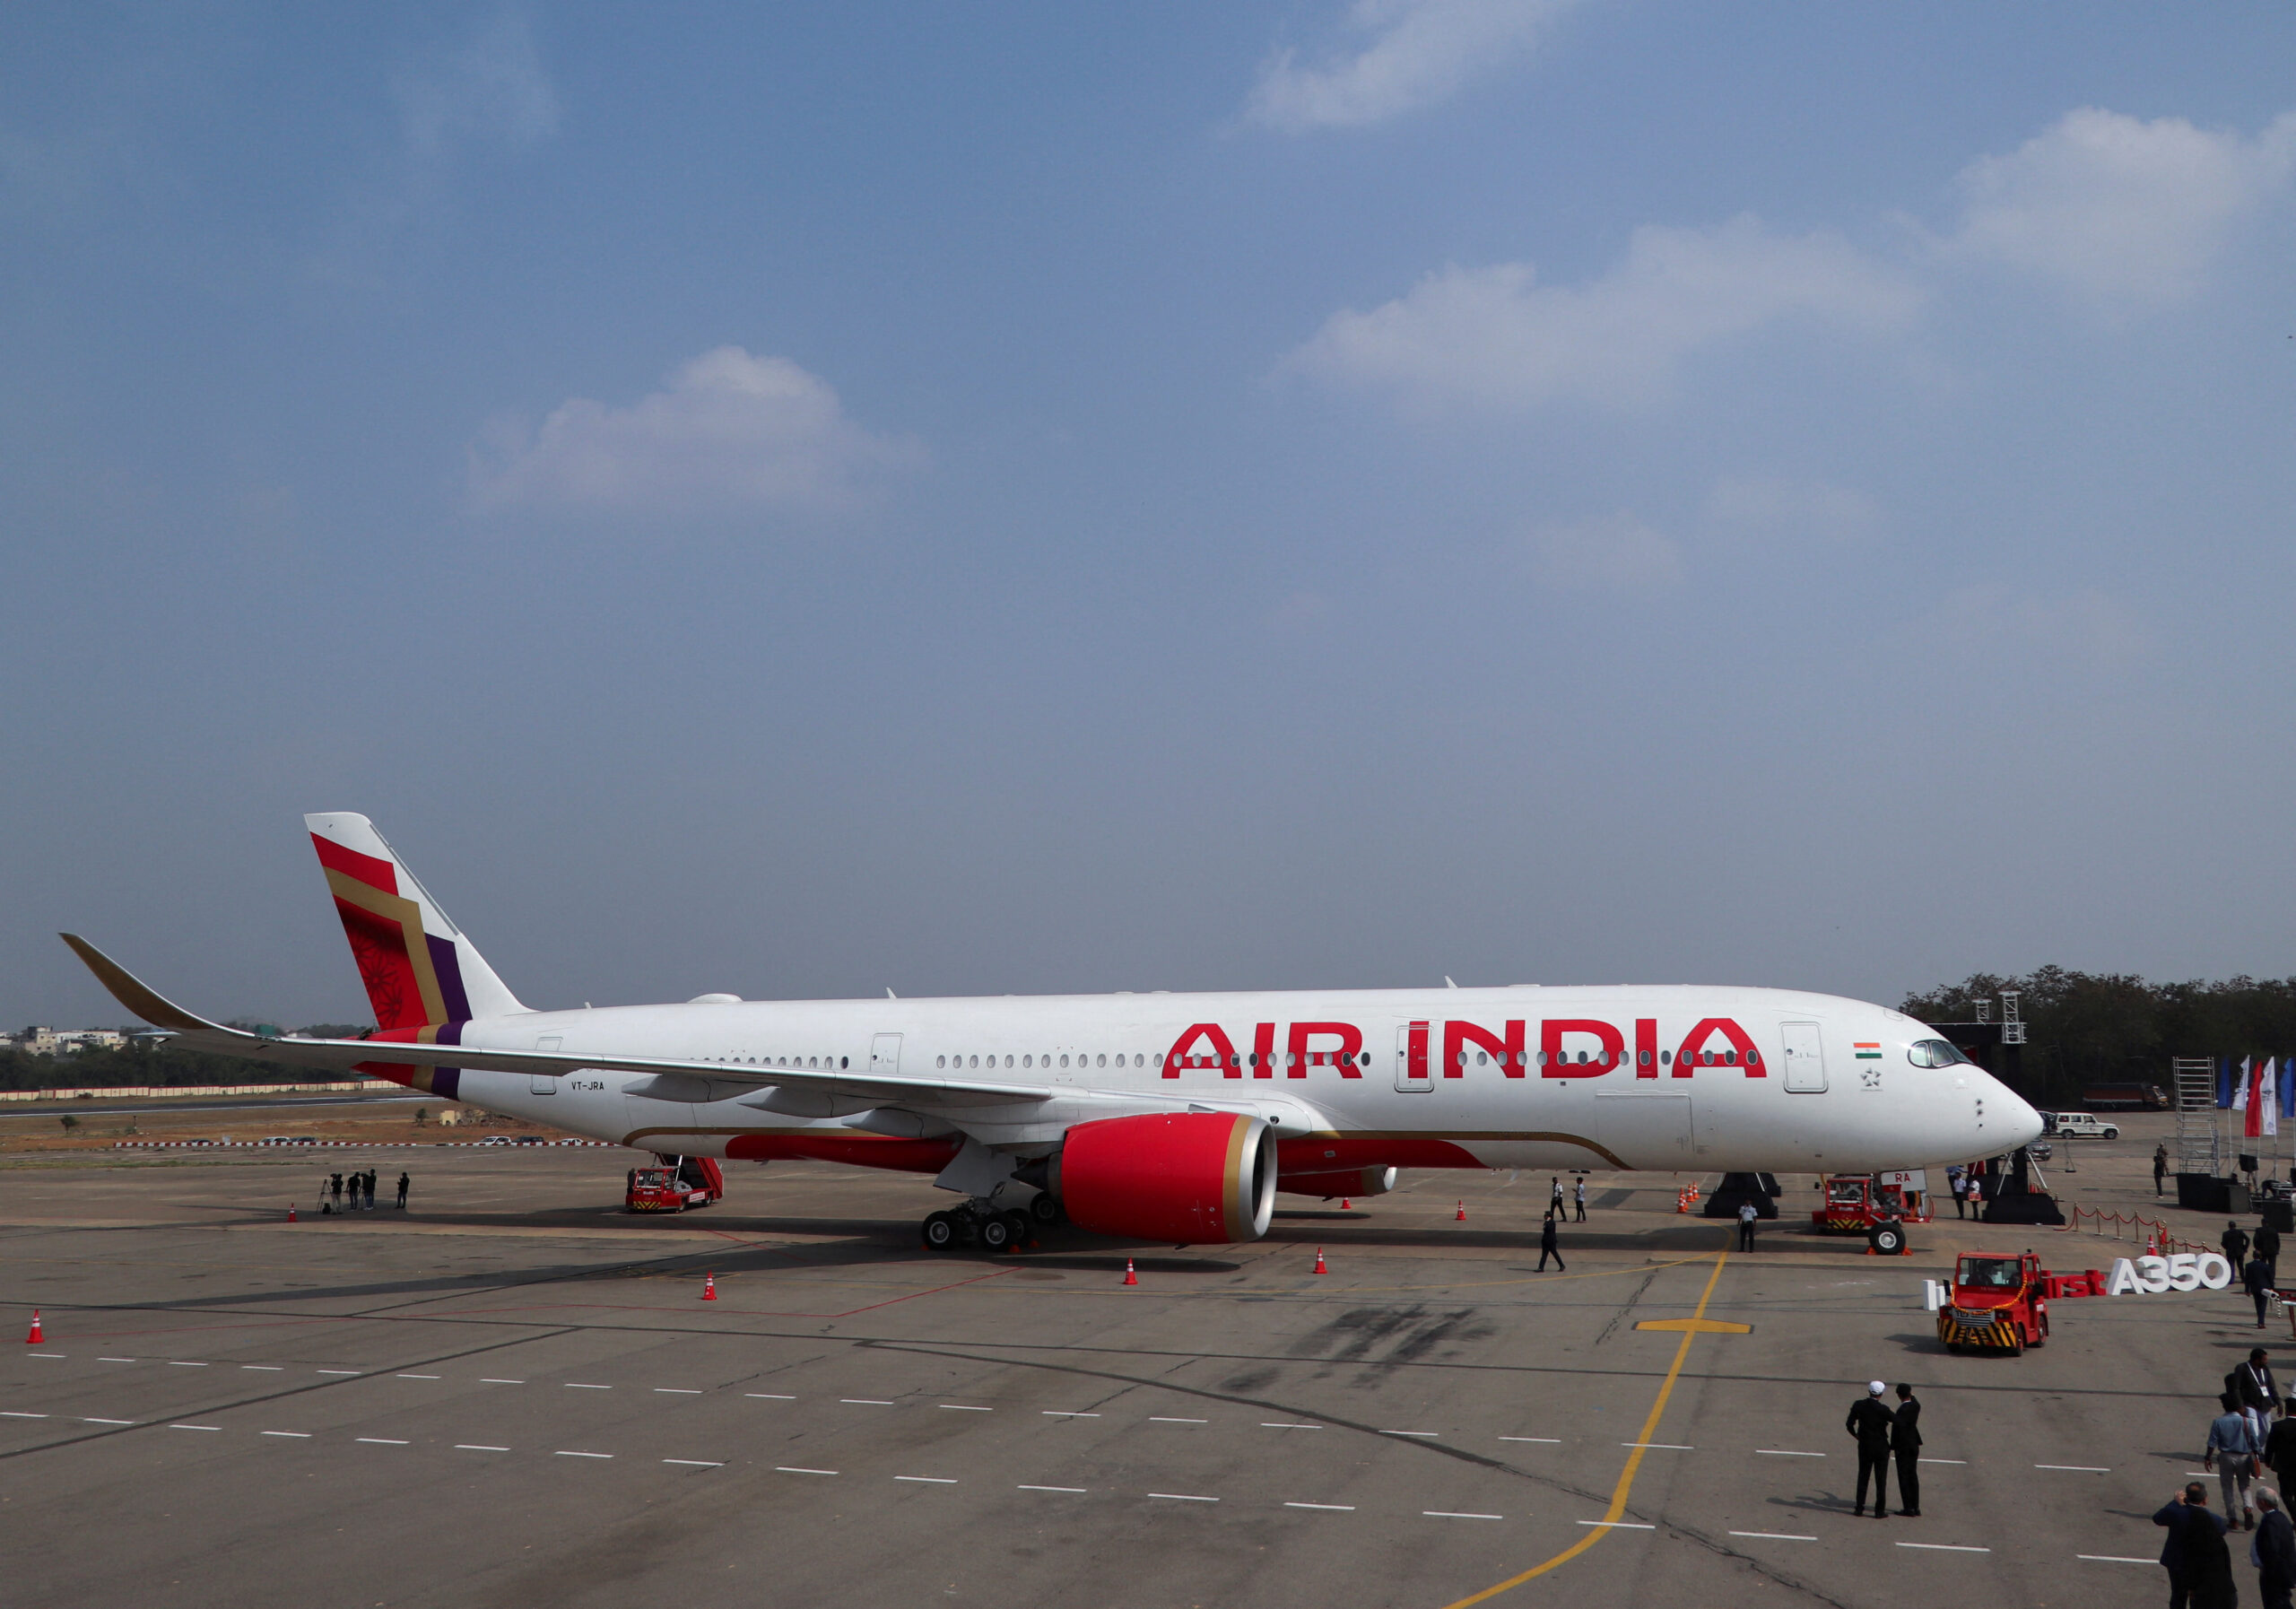 चालक दलका सदस्य एकाएक विरामी भएपछि एयर इन्डियाका ७० उडान रद्द